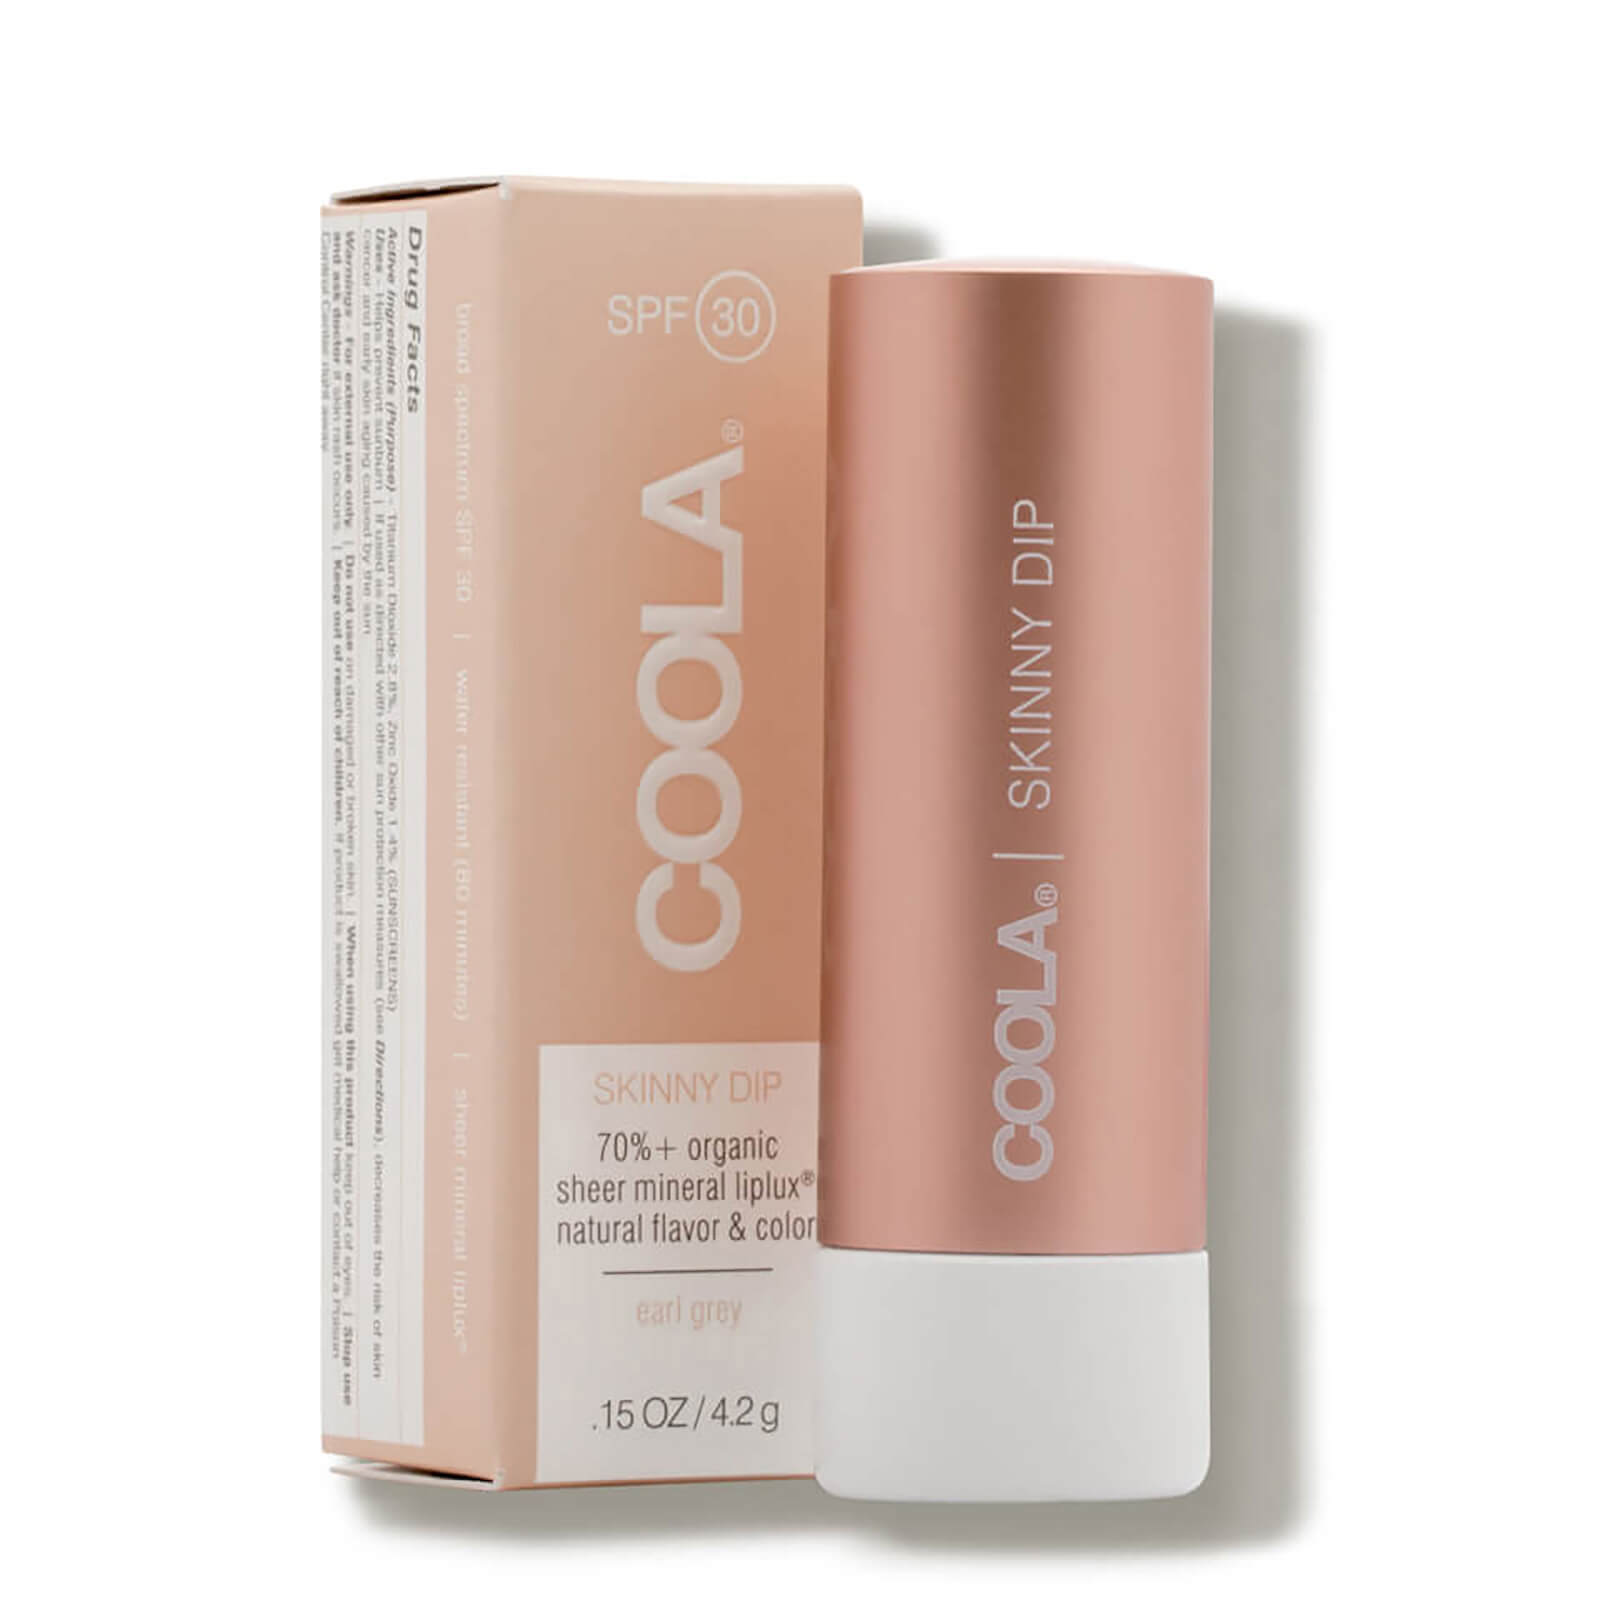 Coola Mineral Liplux Organic Tinted Lip Balm Sunscreen Spf 30 (0.15 Fl. Oz.) In Skinny Dip